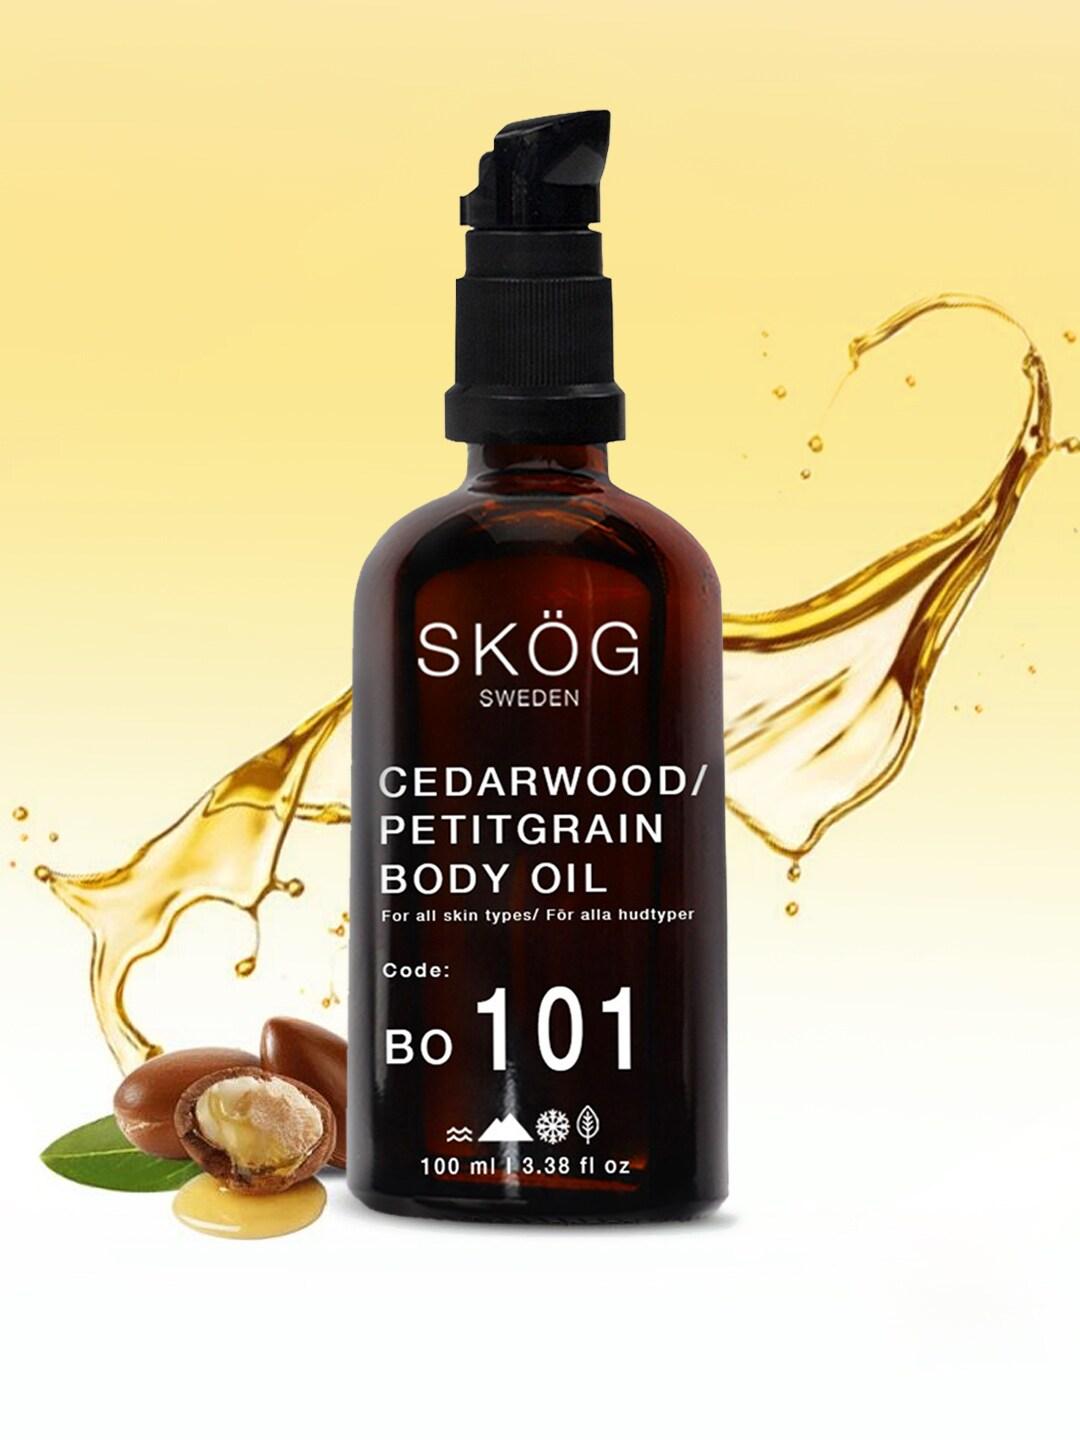 SKOG Cedarwood / Petitgrain Body Oil